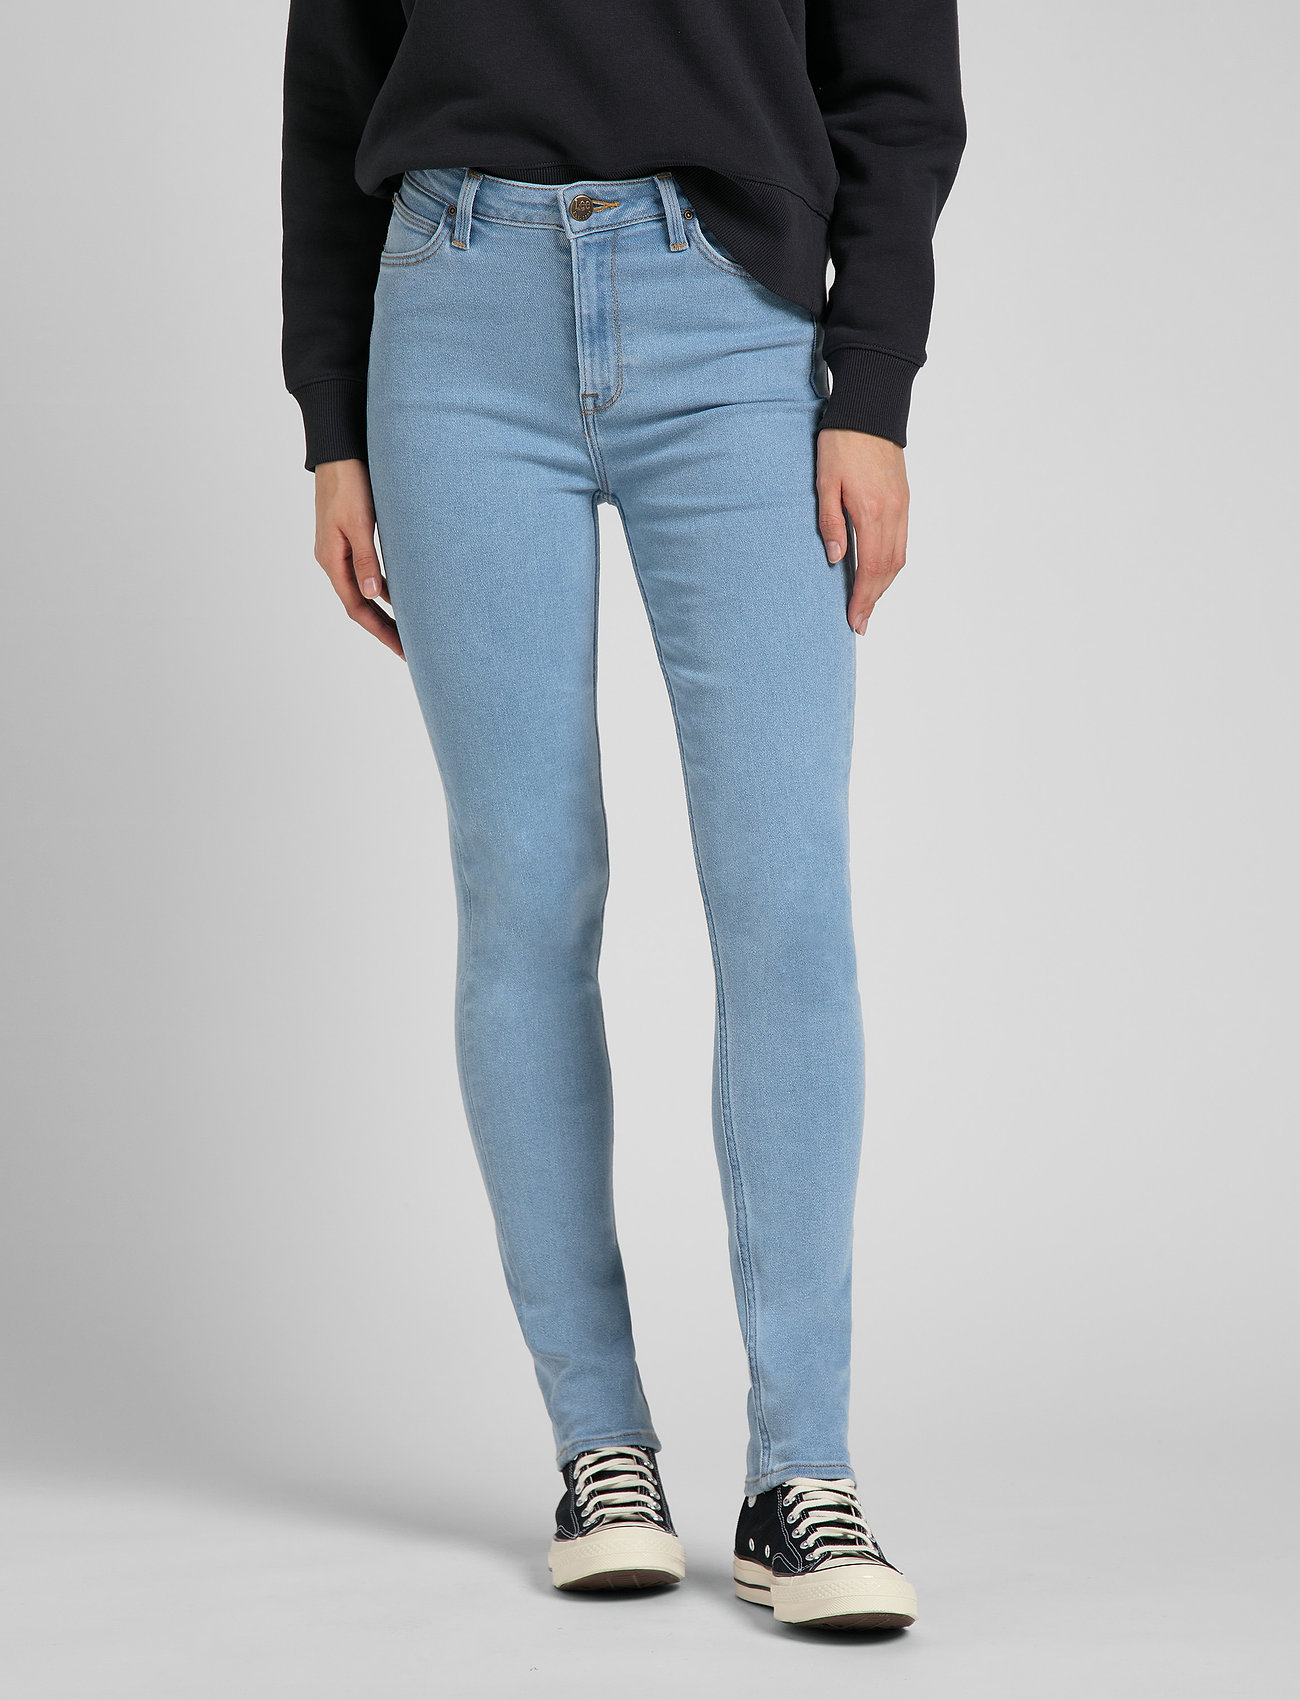 Lee Ivy - jeans - Boozt.com